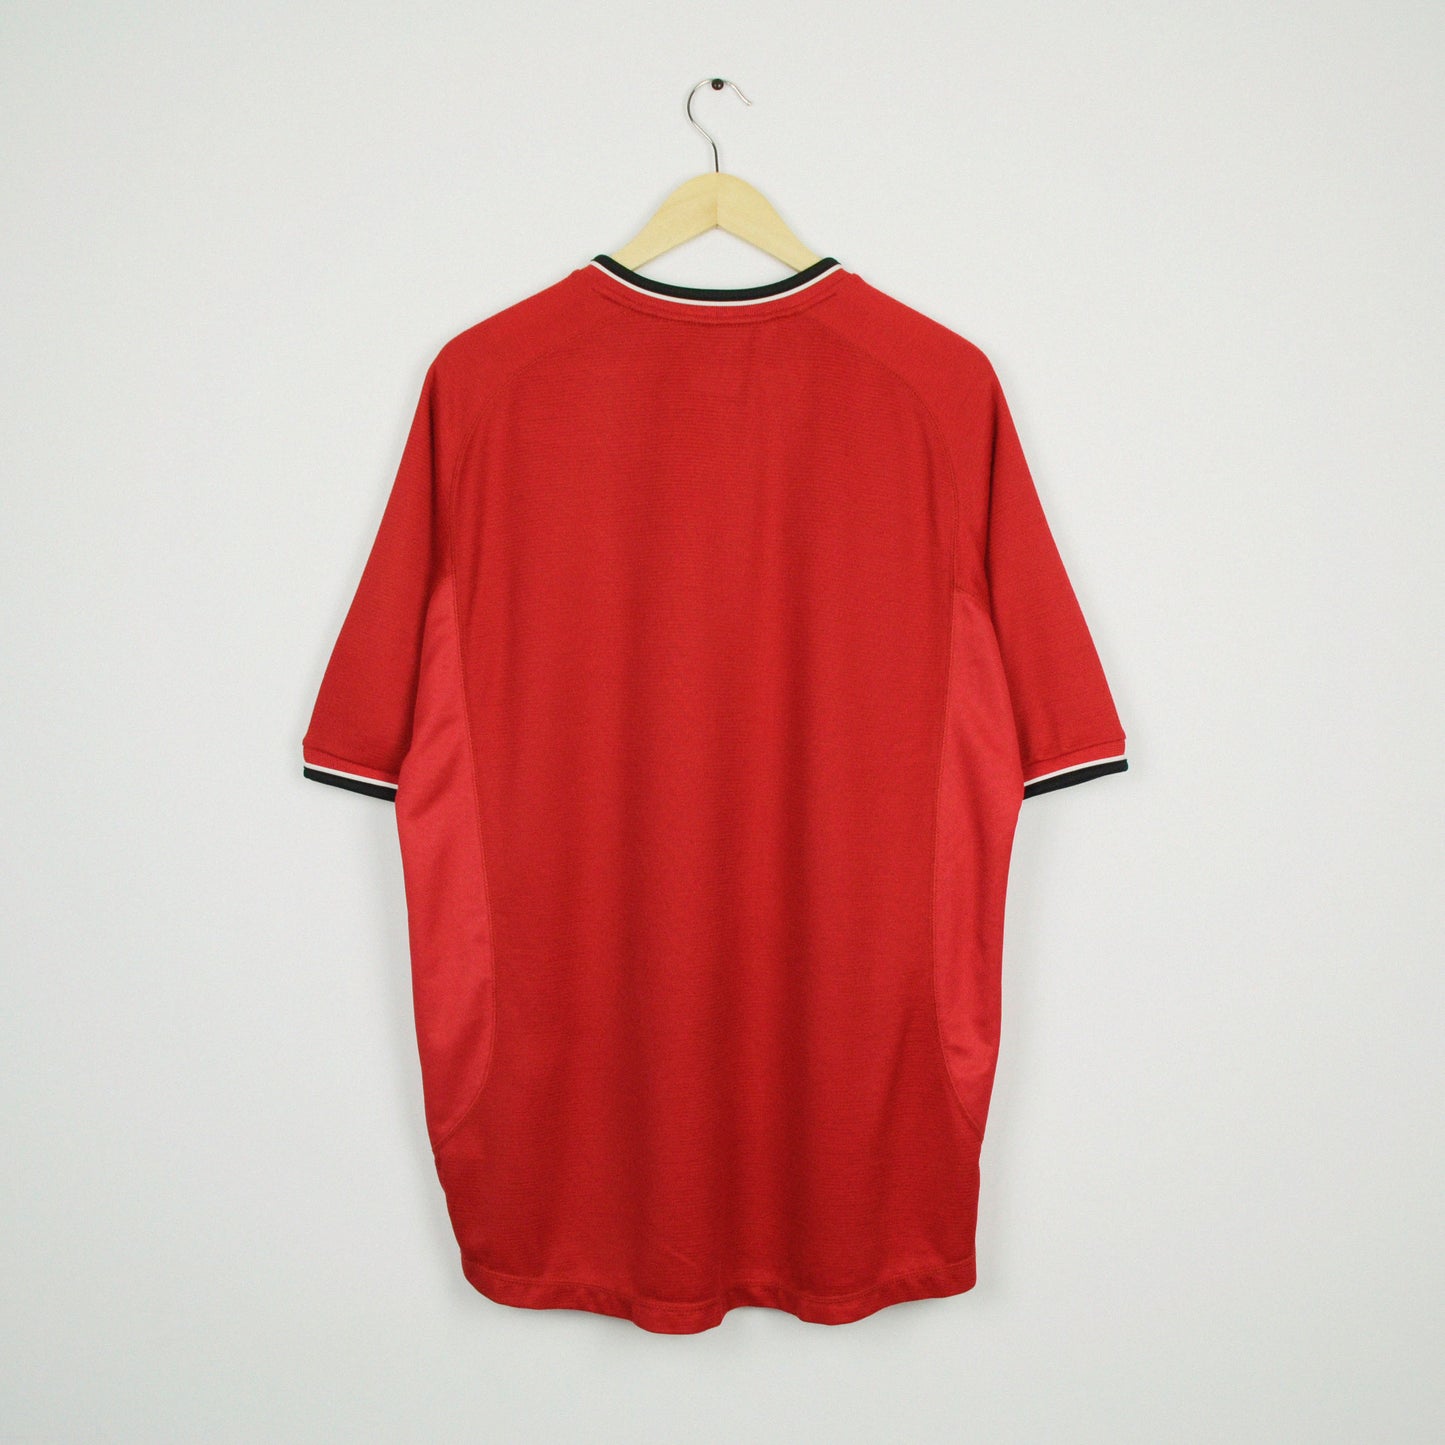 2000-02 Umbro Manchester United Home Shirt L